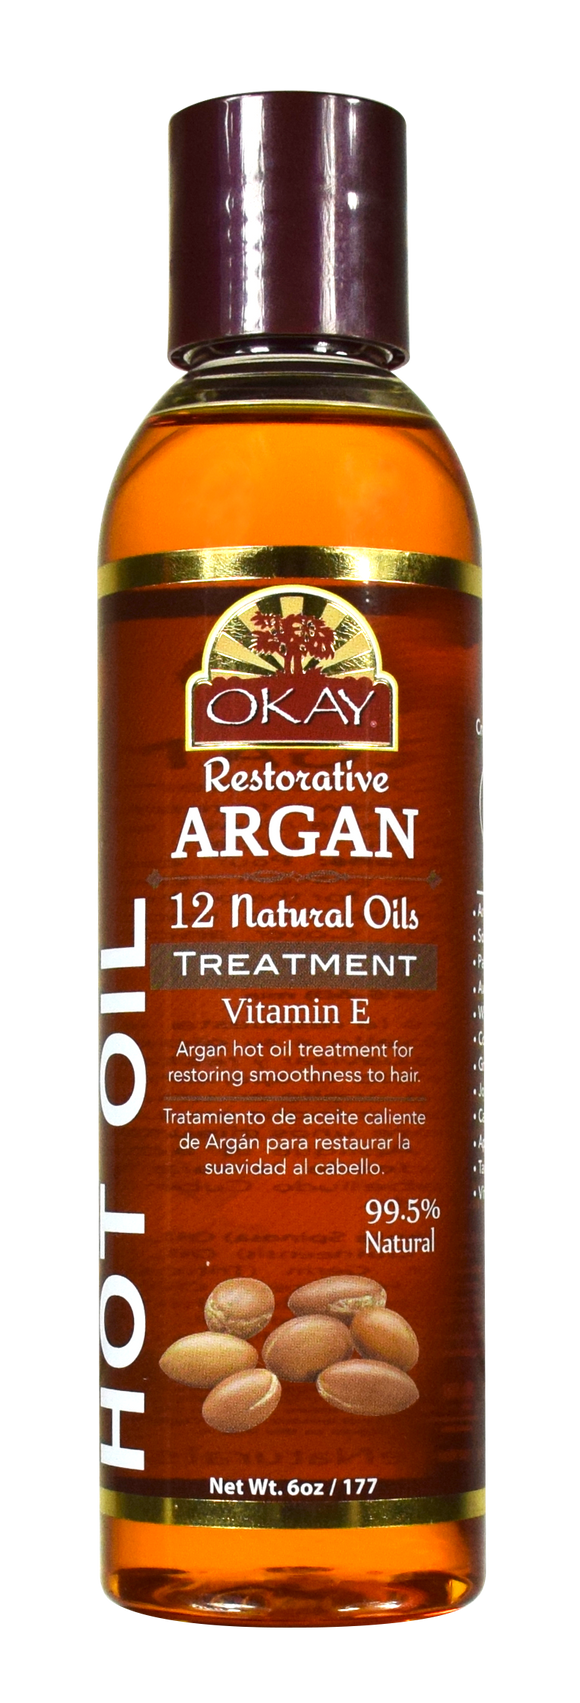 Okay Argan Oil Hot Oil Treatment, 6 Oz